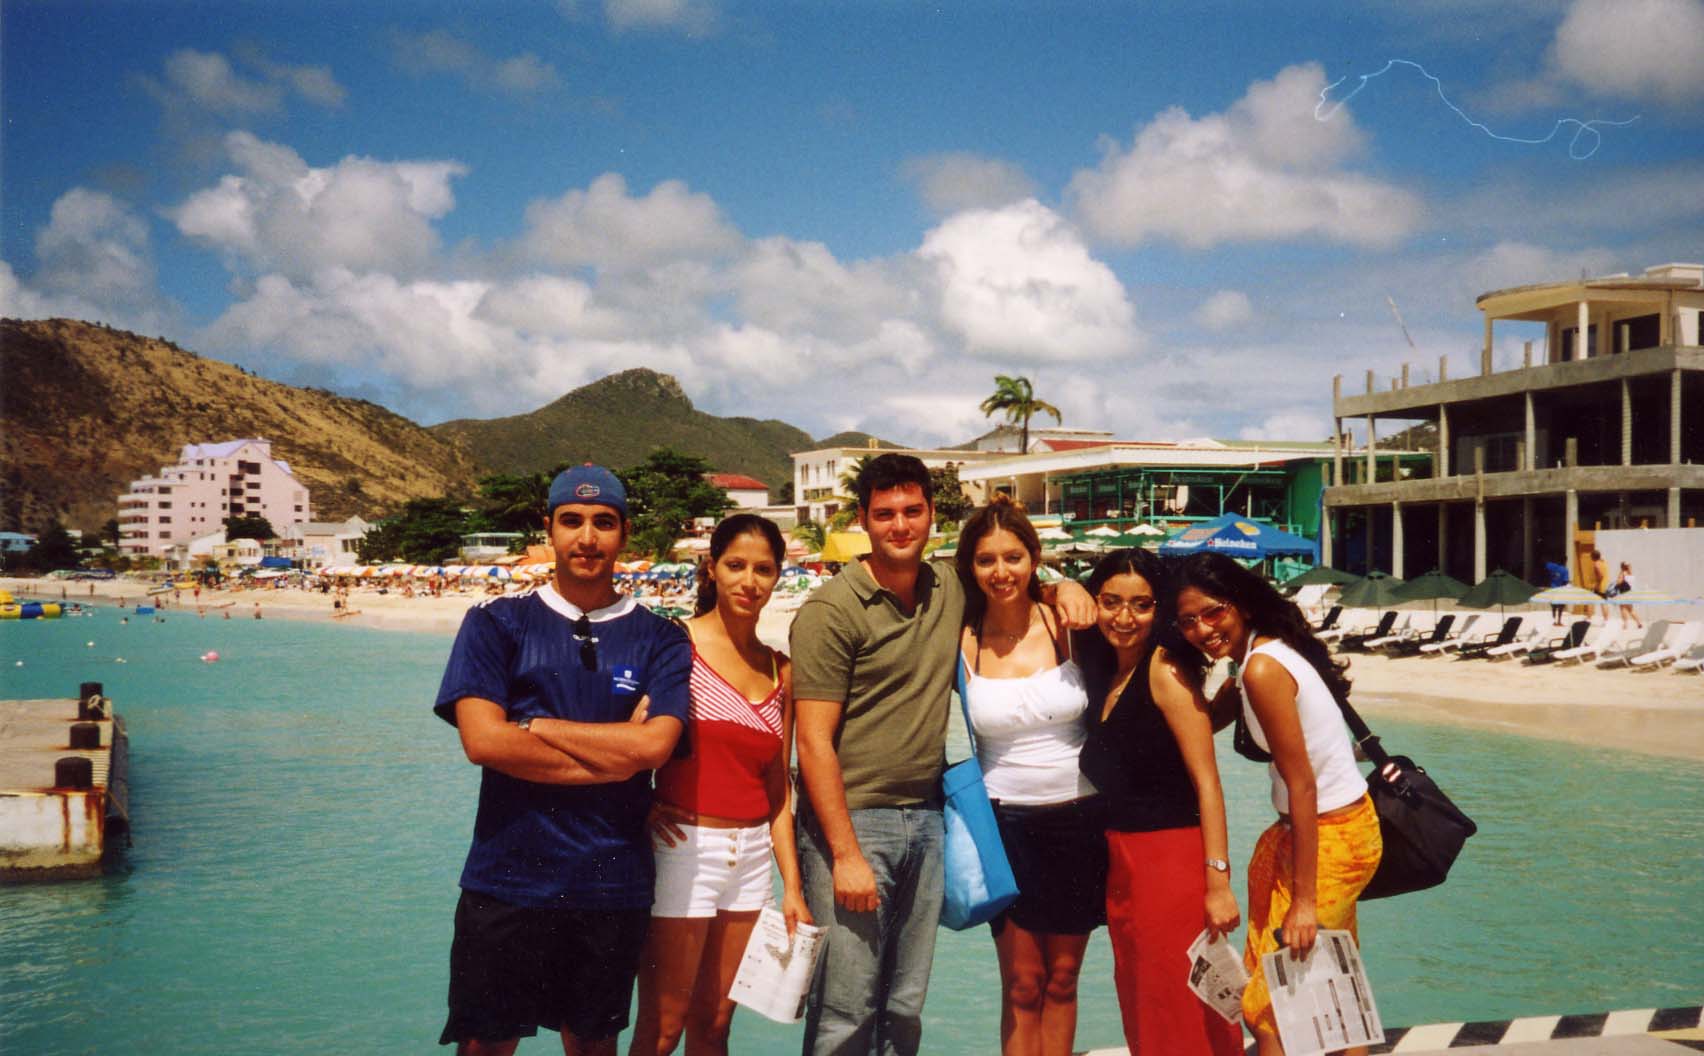 Spring break on St. Martin Island, Caribbean (March 2003)